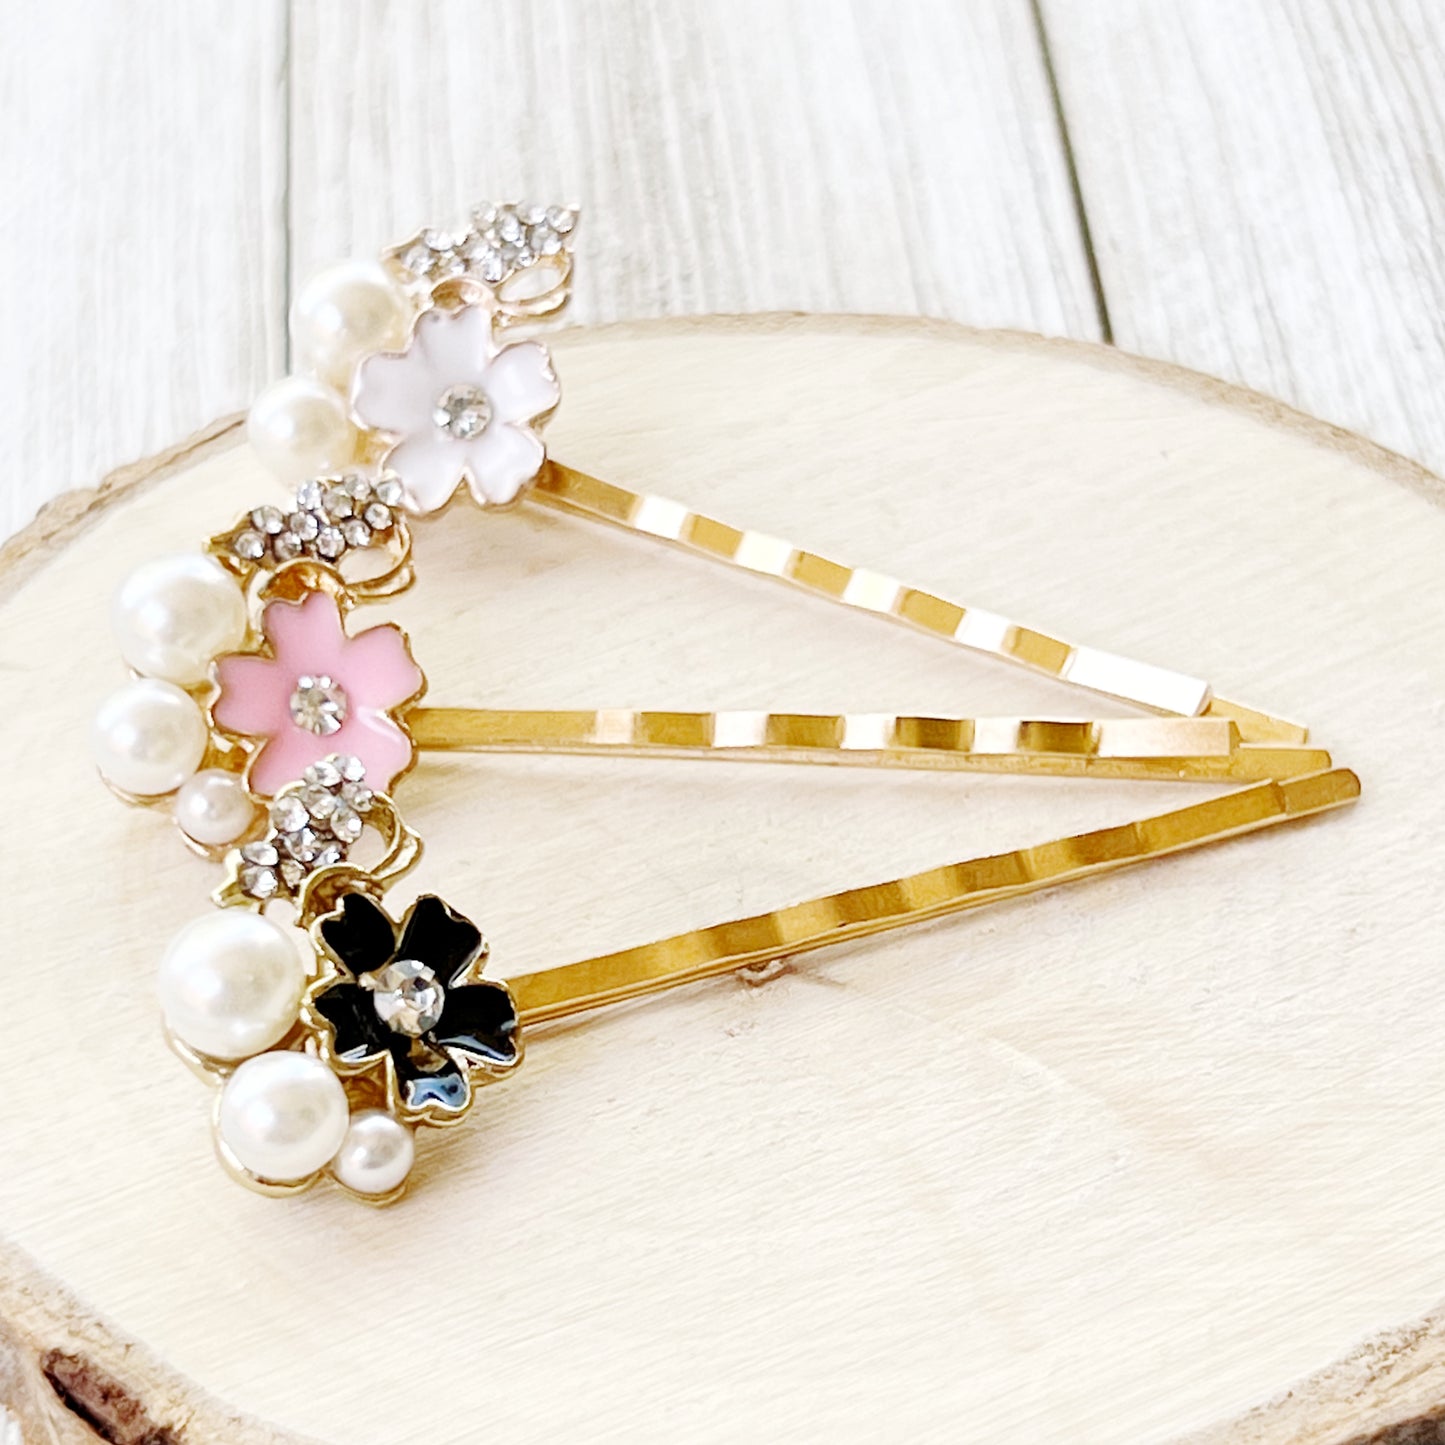 Black, White & Pink Enamel and Rhinestone Flower Hair Pins Set of 3 - Elegant and Versatile Hair Accessories